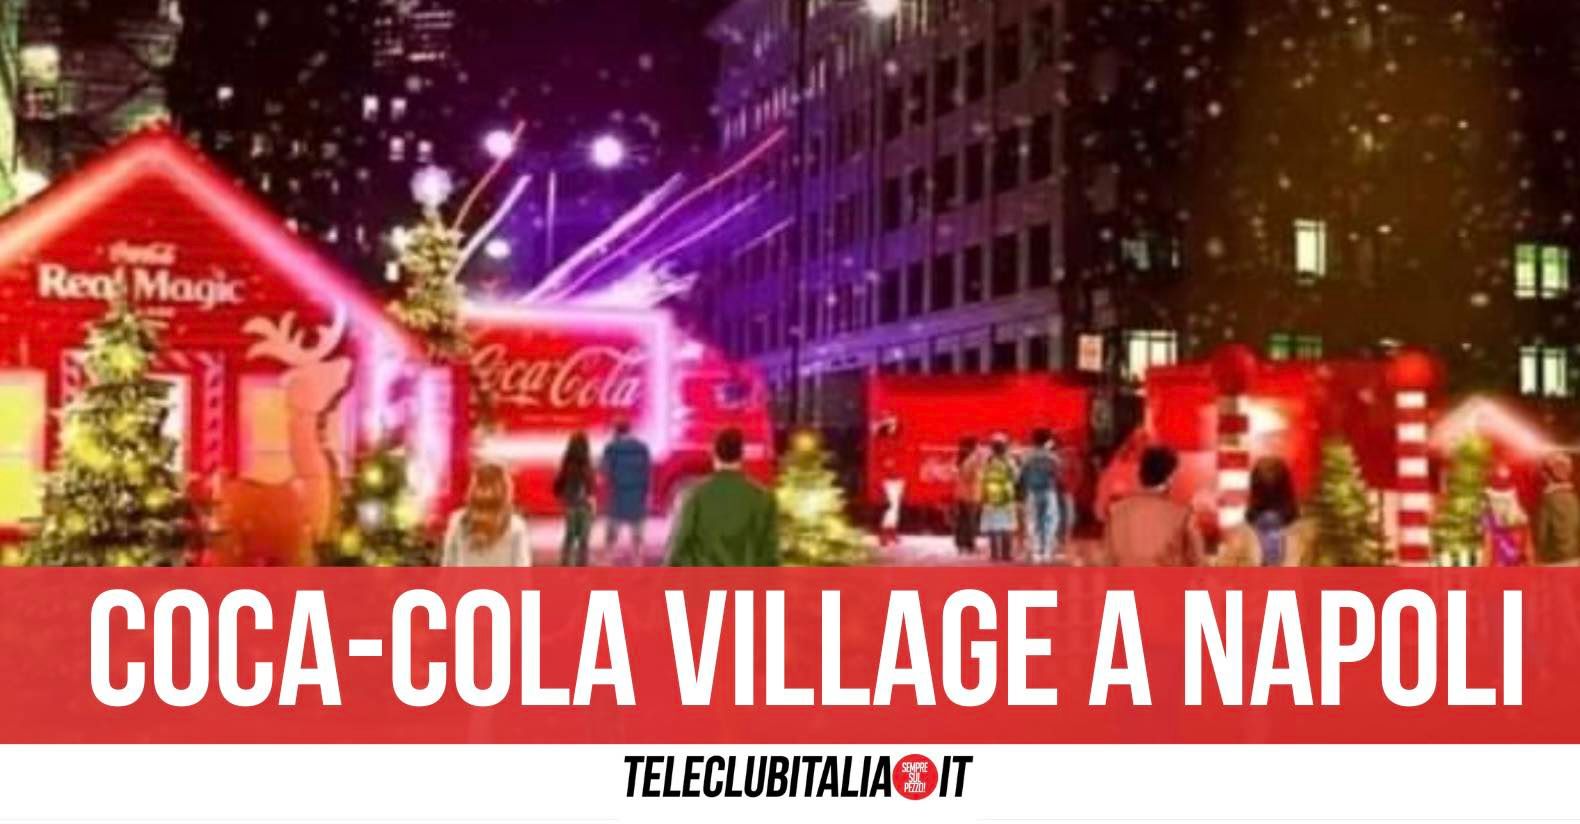 coca-cola village napoli